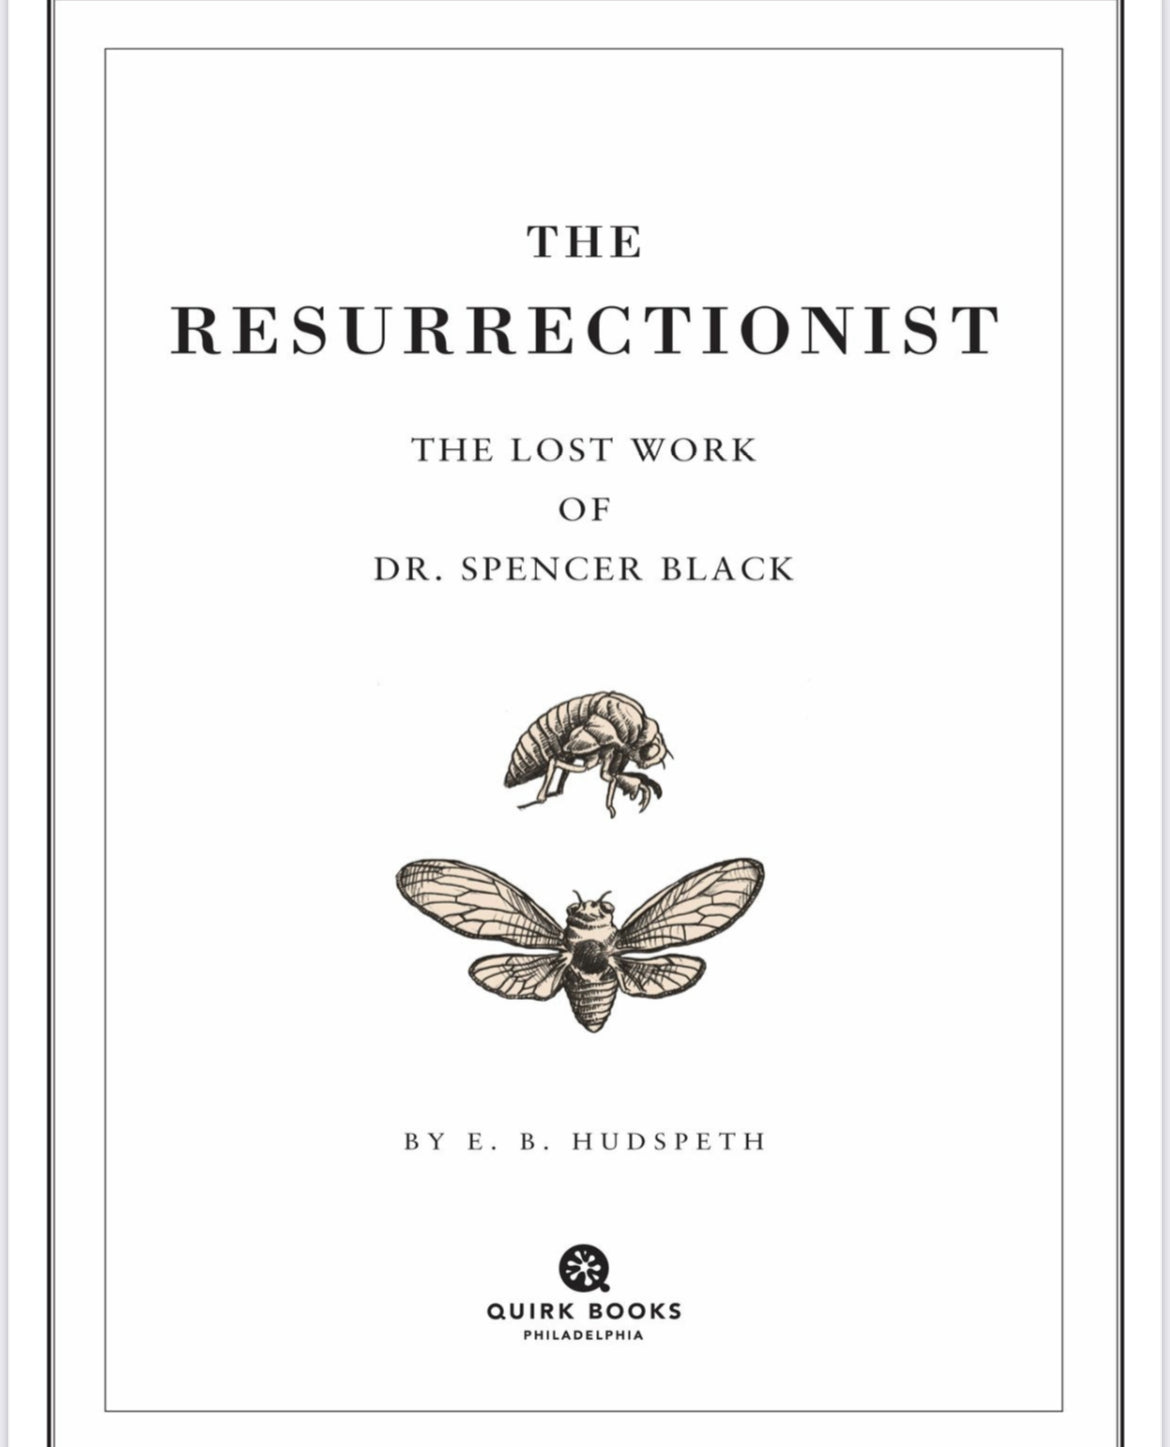 The Resurrectionist Hardcover artbook